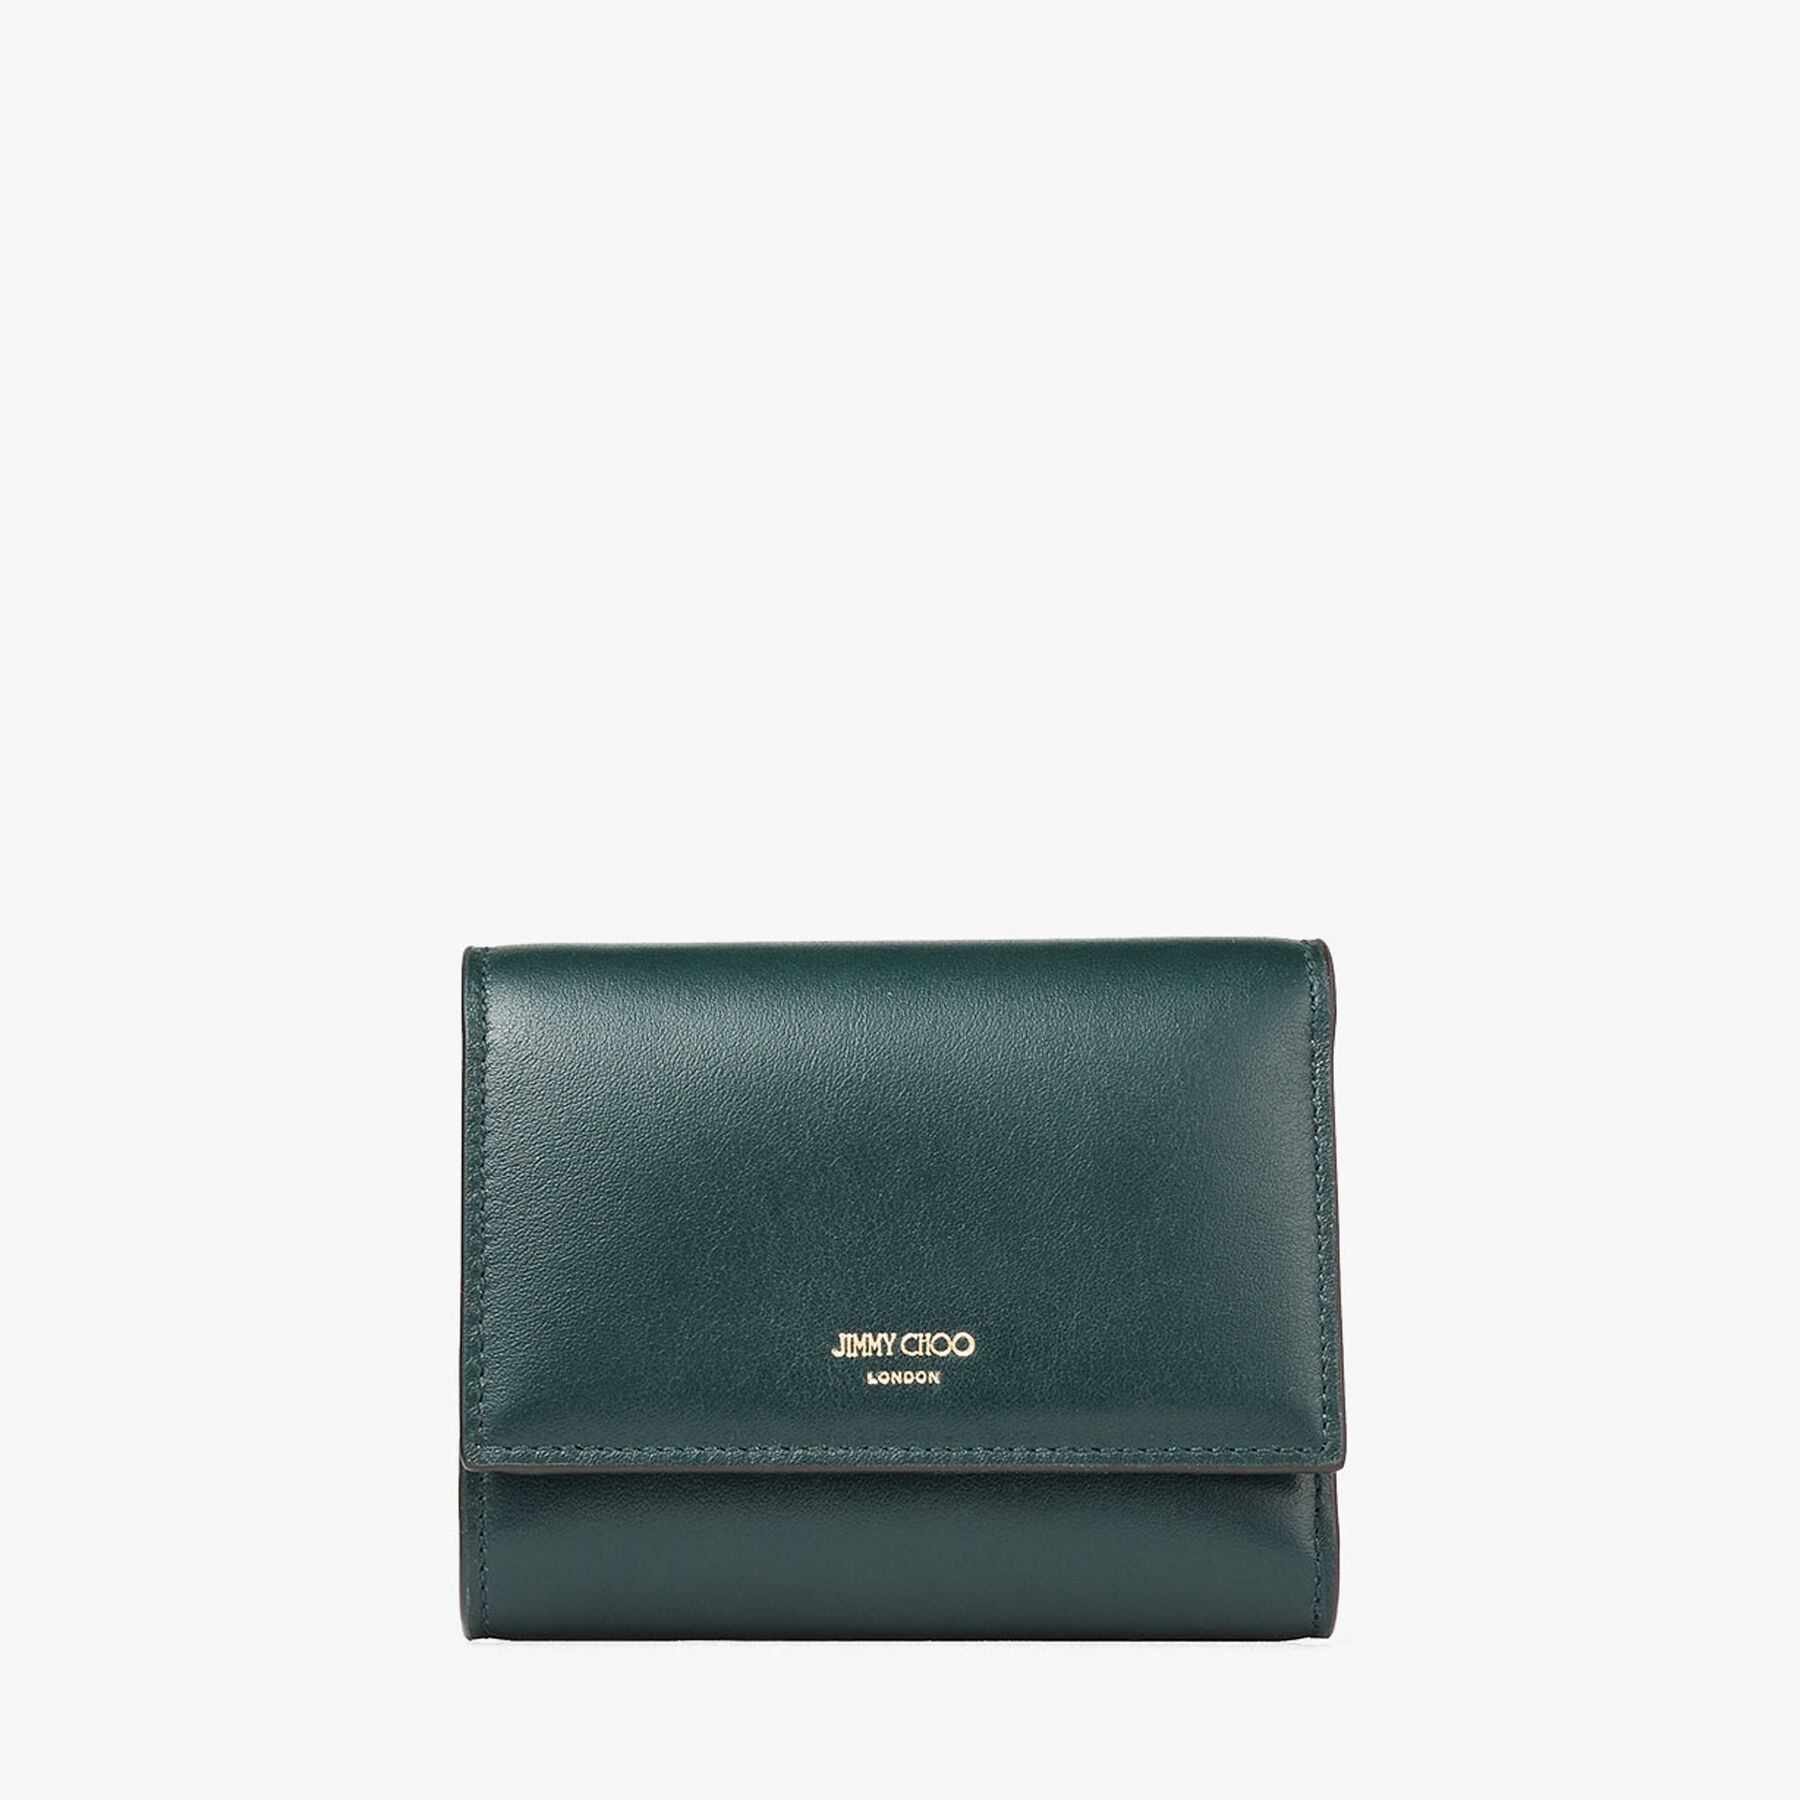 Marinda
Dark Green and Biscuit Bi-Colour Leather Wallet - 1